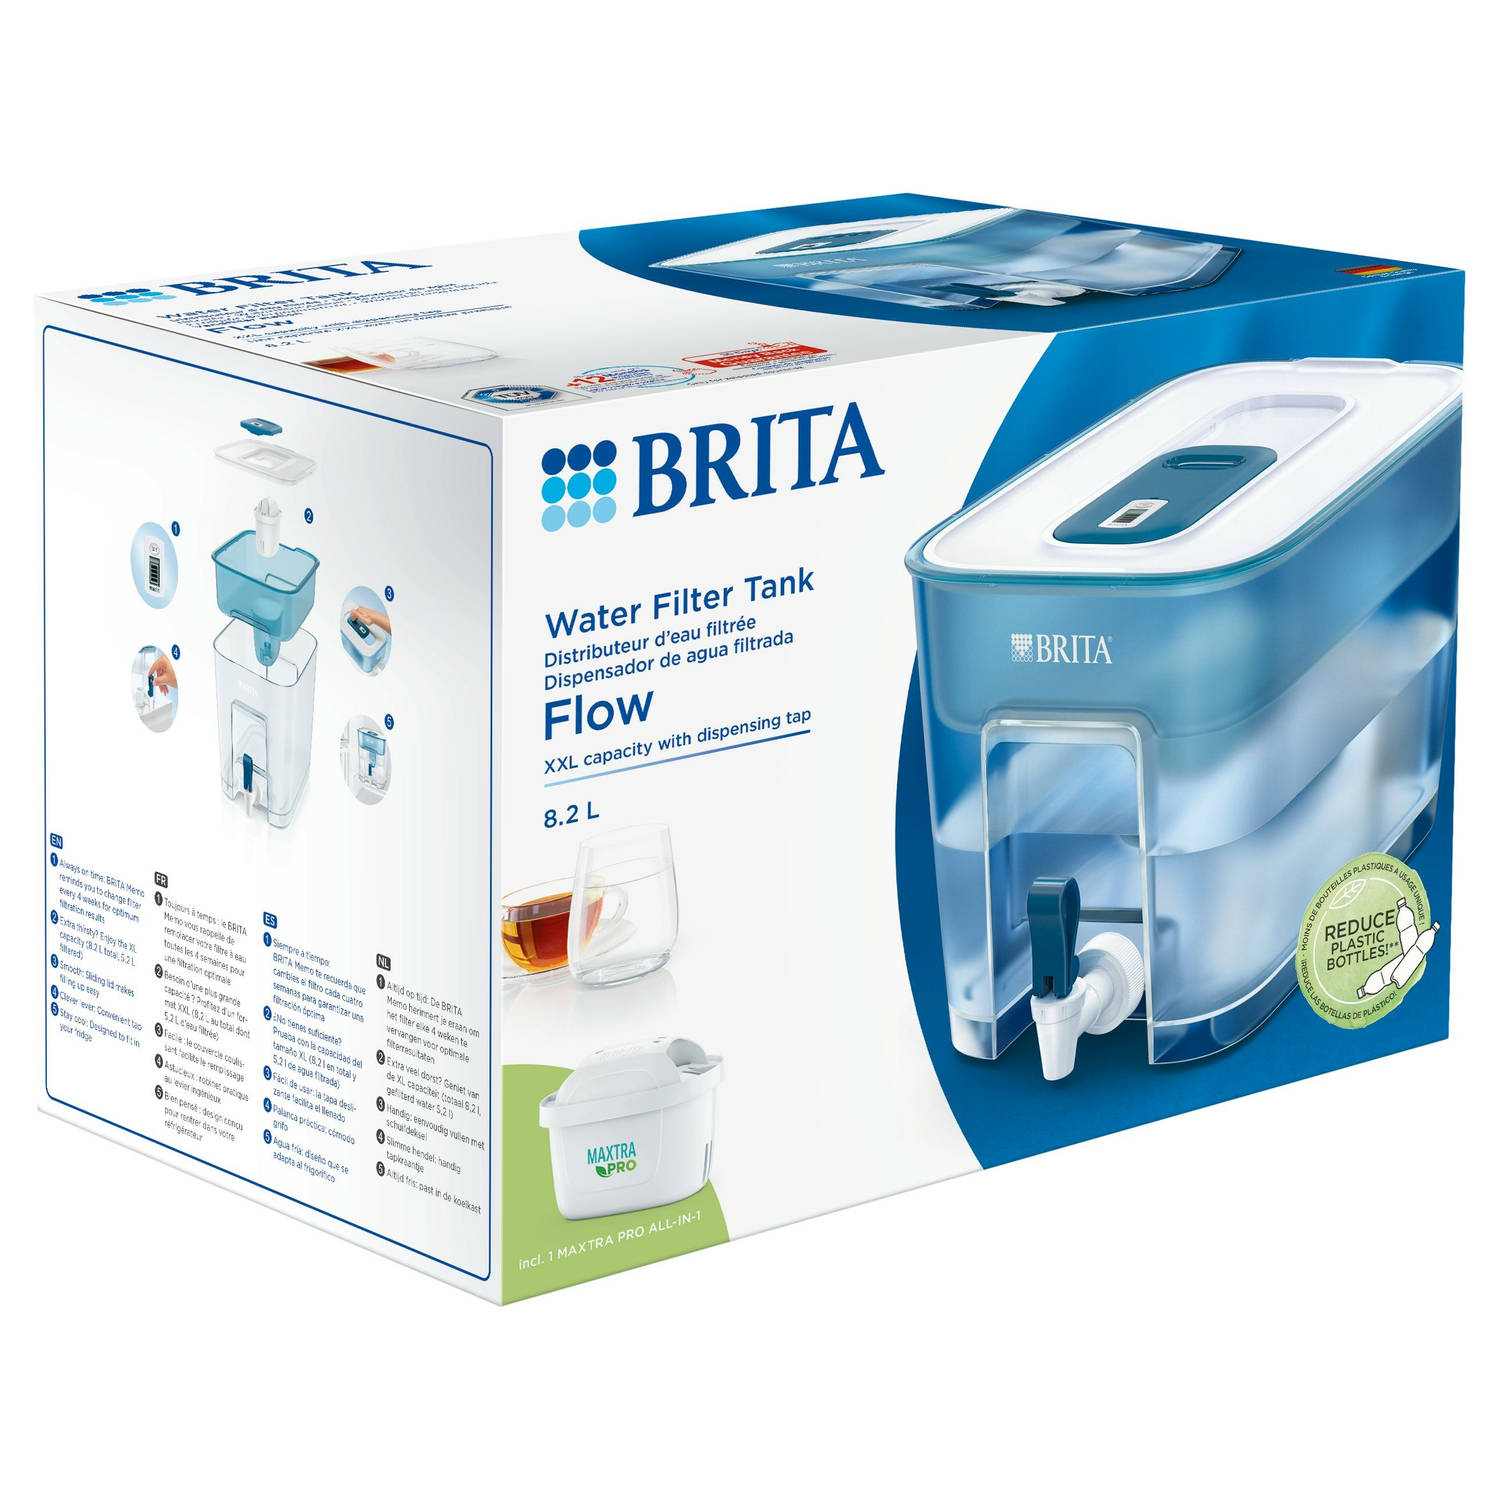 BRITA - Waterfilterkan - Flow Cool - inclusief 1 MAXTRA PRO ALL-IN-1 Waterfilterpatroon - Blauw - 8,2L - Moederdag Cadeautje